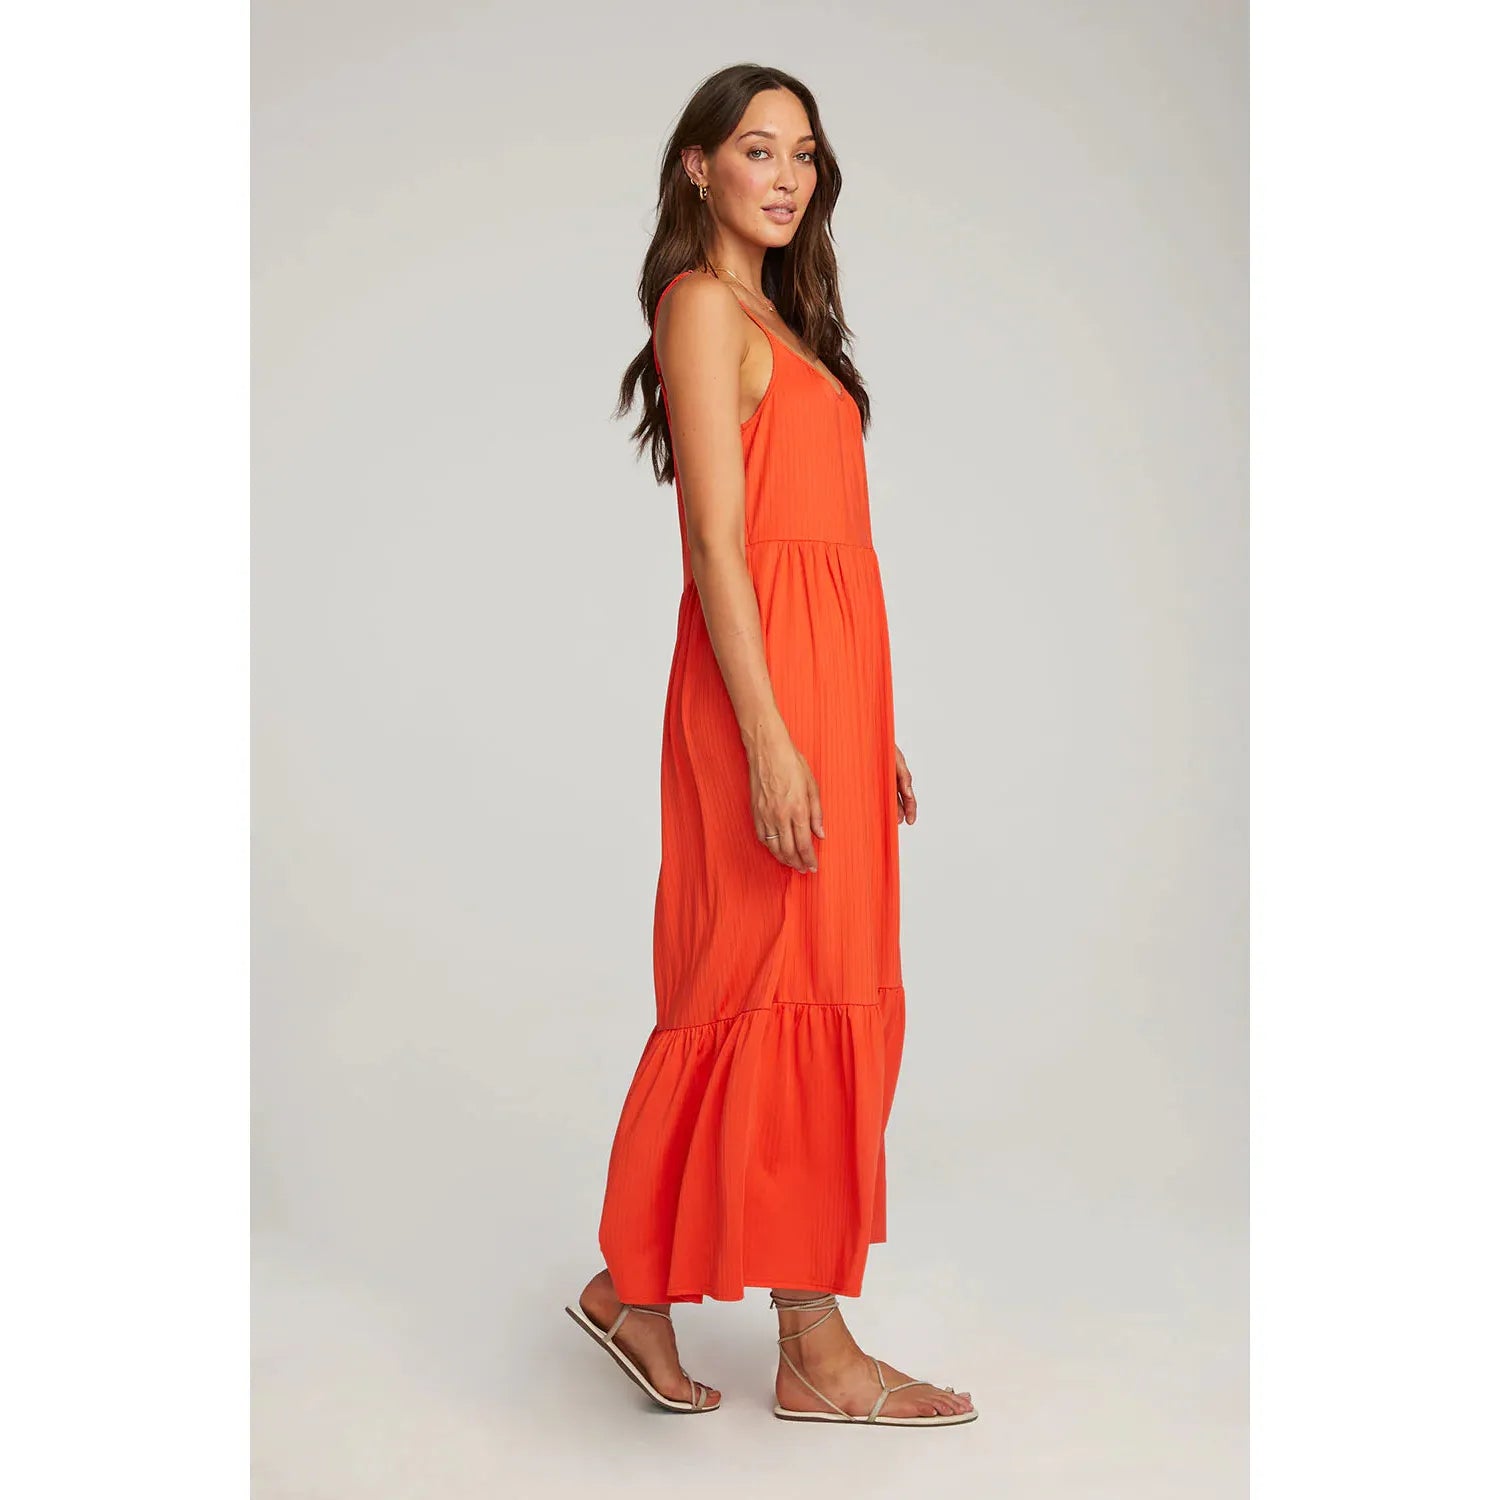 Saltwater Luxe - Tank Midi Dress in Hot Orange